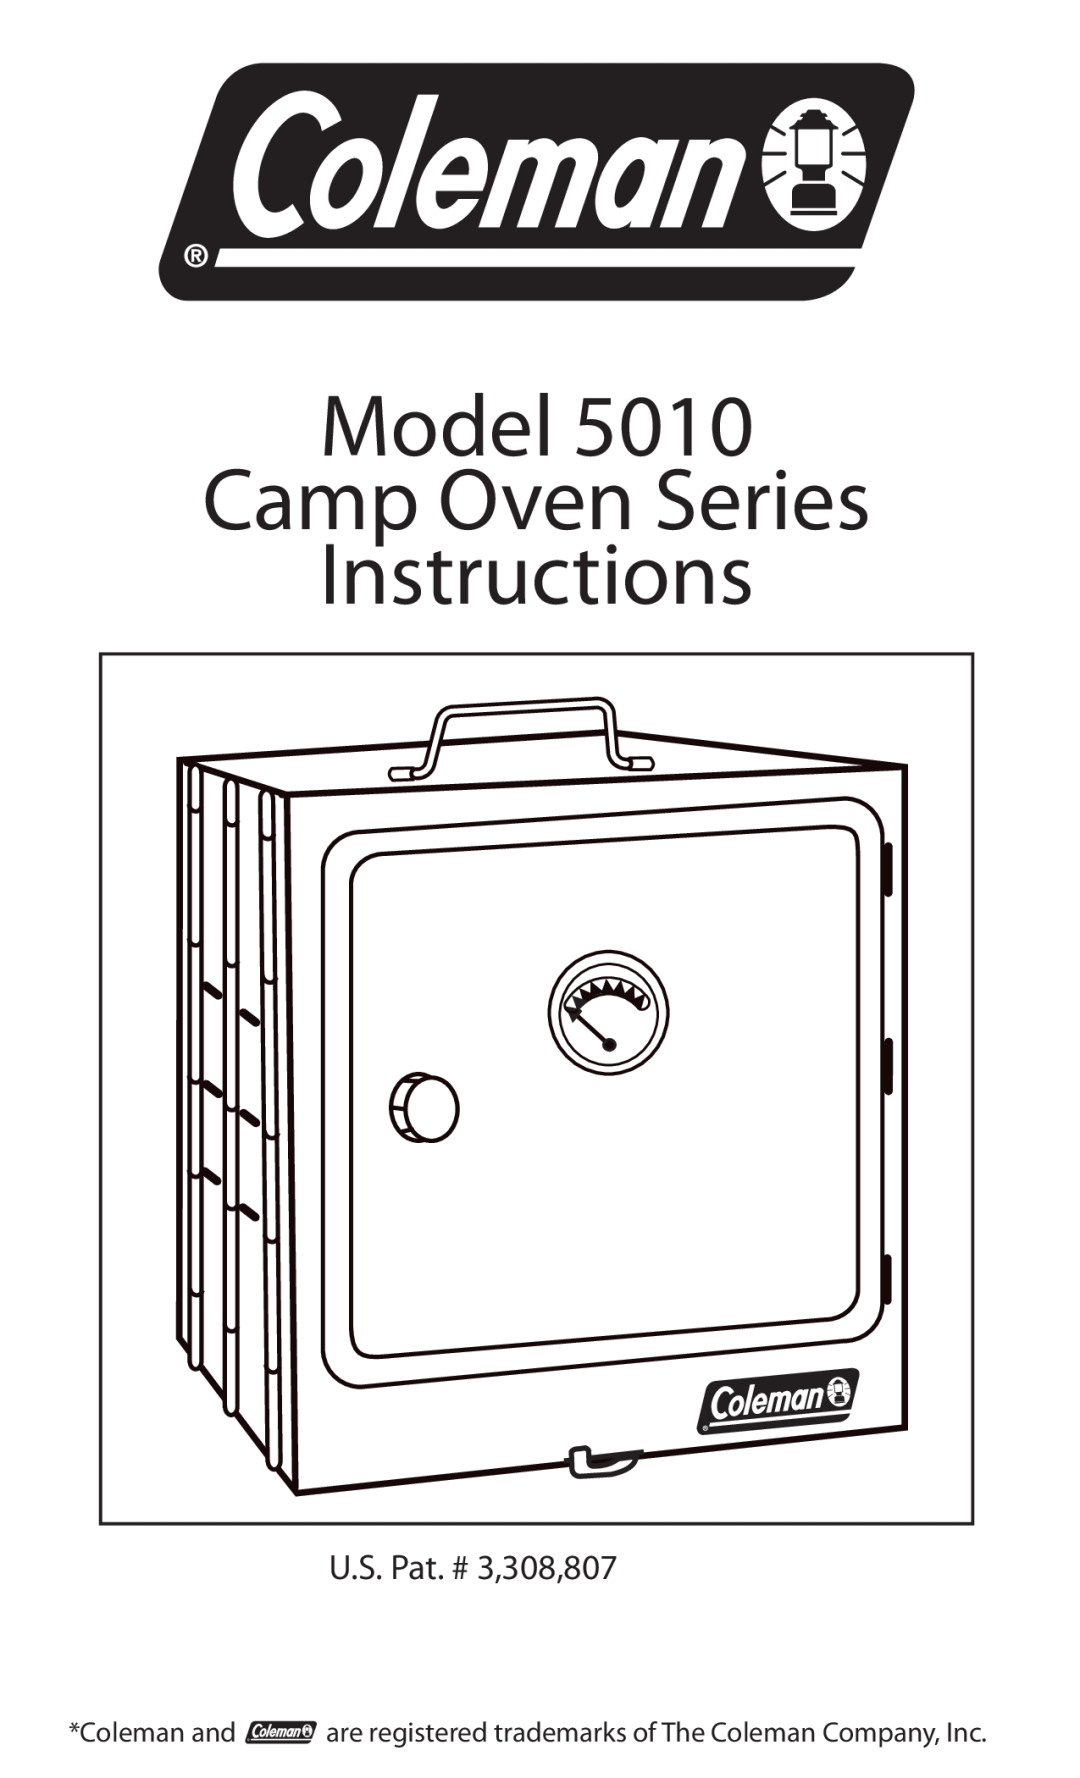 Coleman 5010 manual Model Camp Oven Series Instructions, U.S. Pat. # 3,308,807 